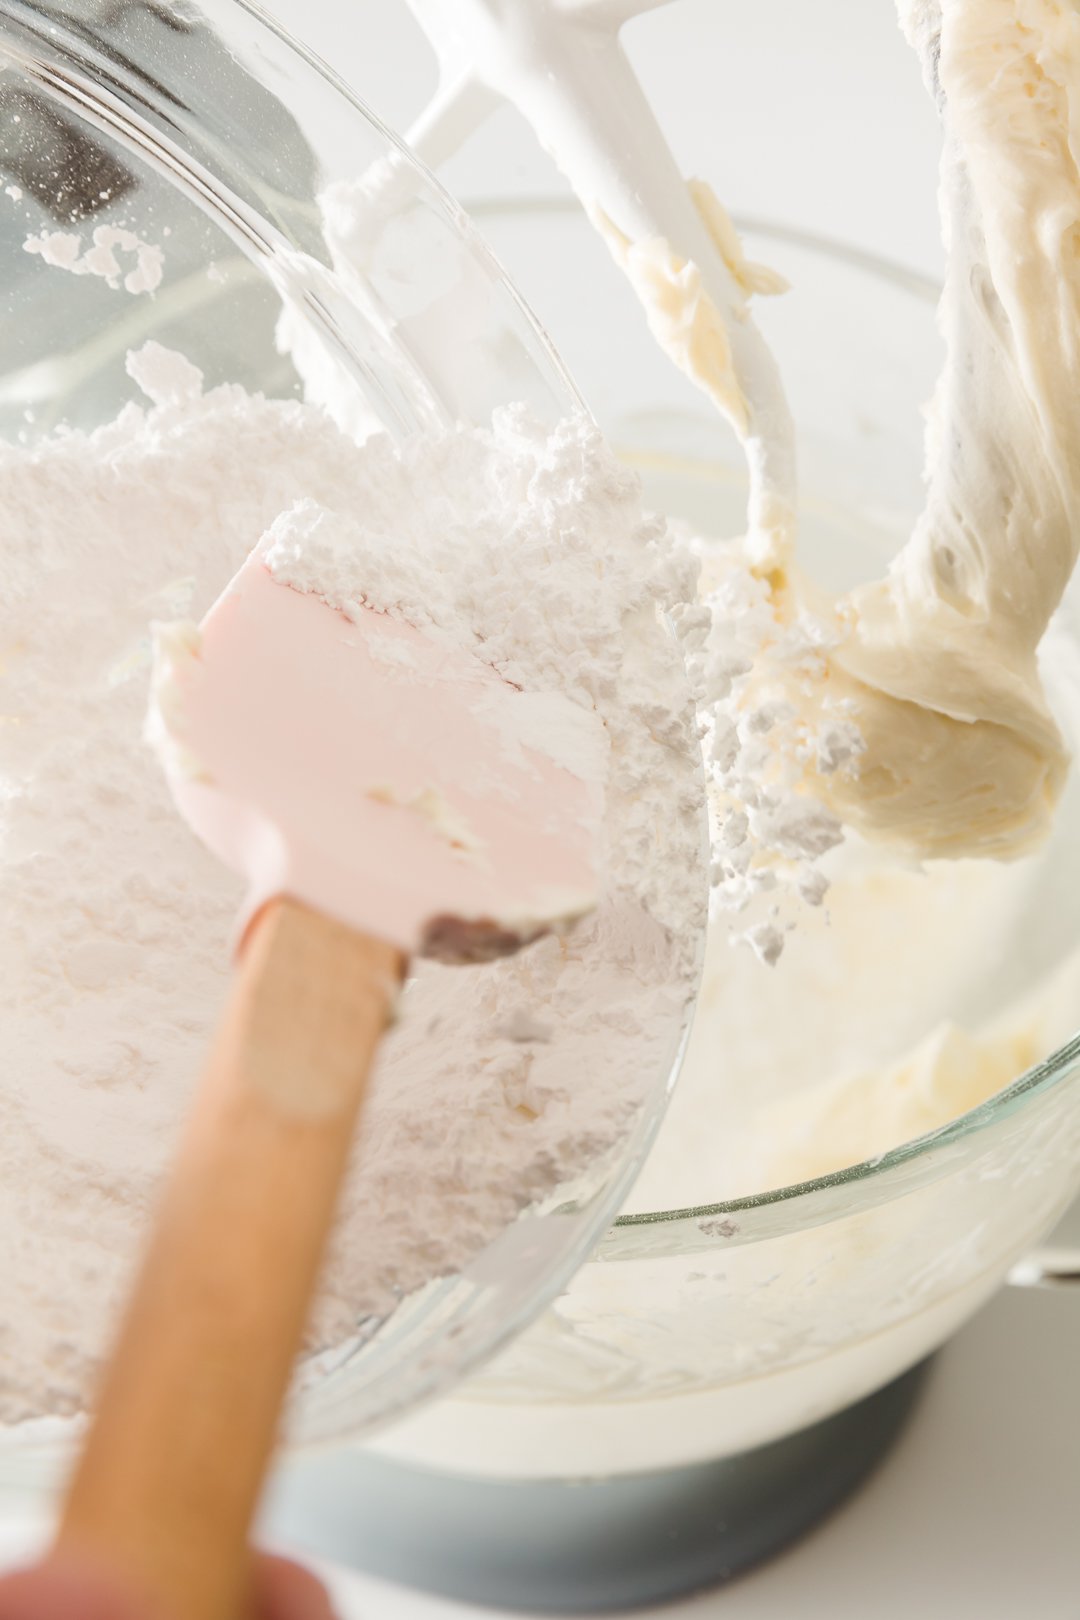 Adding powdered sugar to vanilla frosting recipe